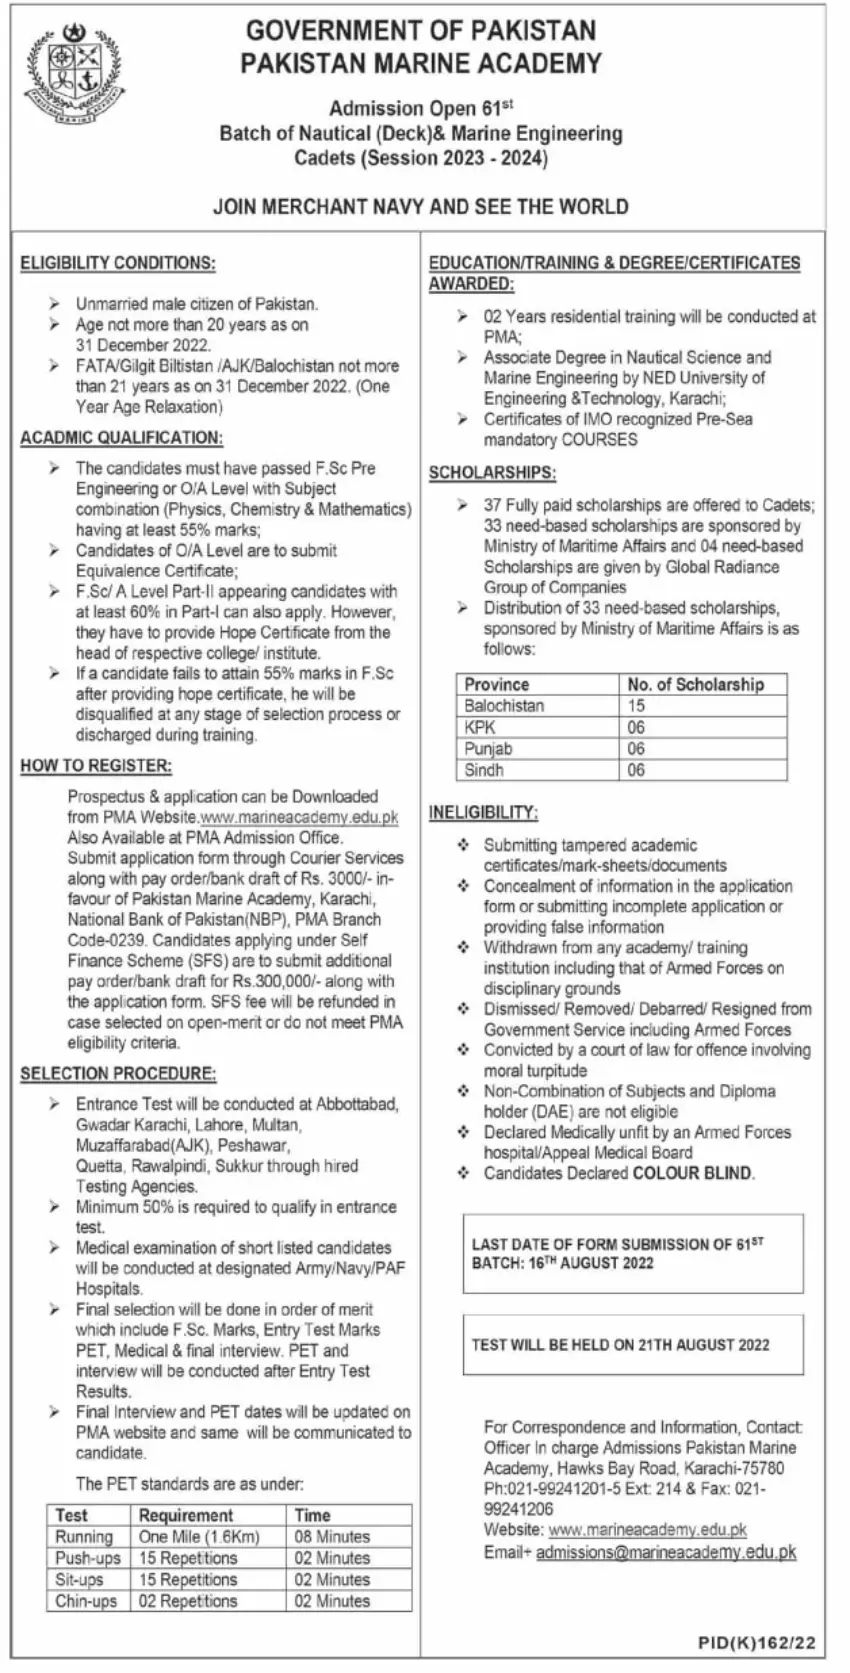 Pakistan Marine Academy Admission 2023